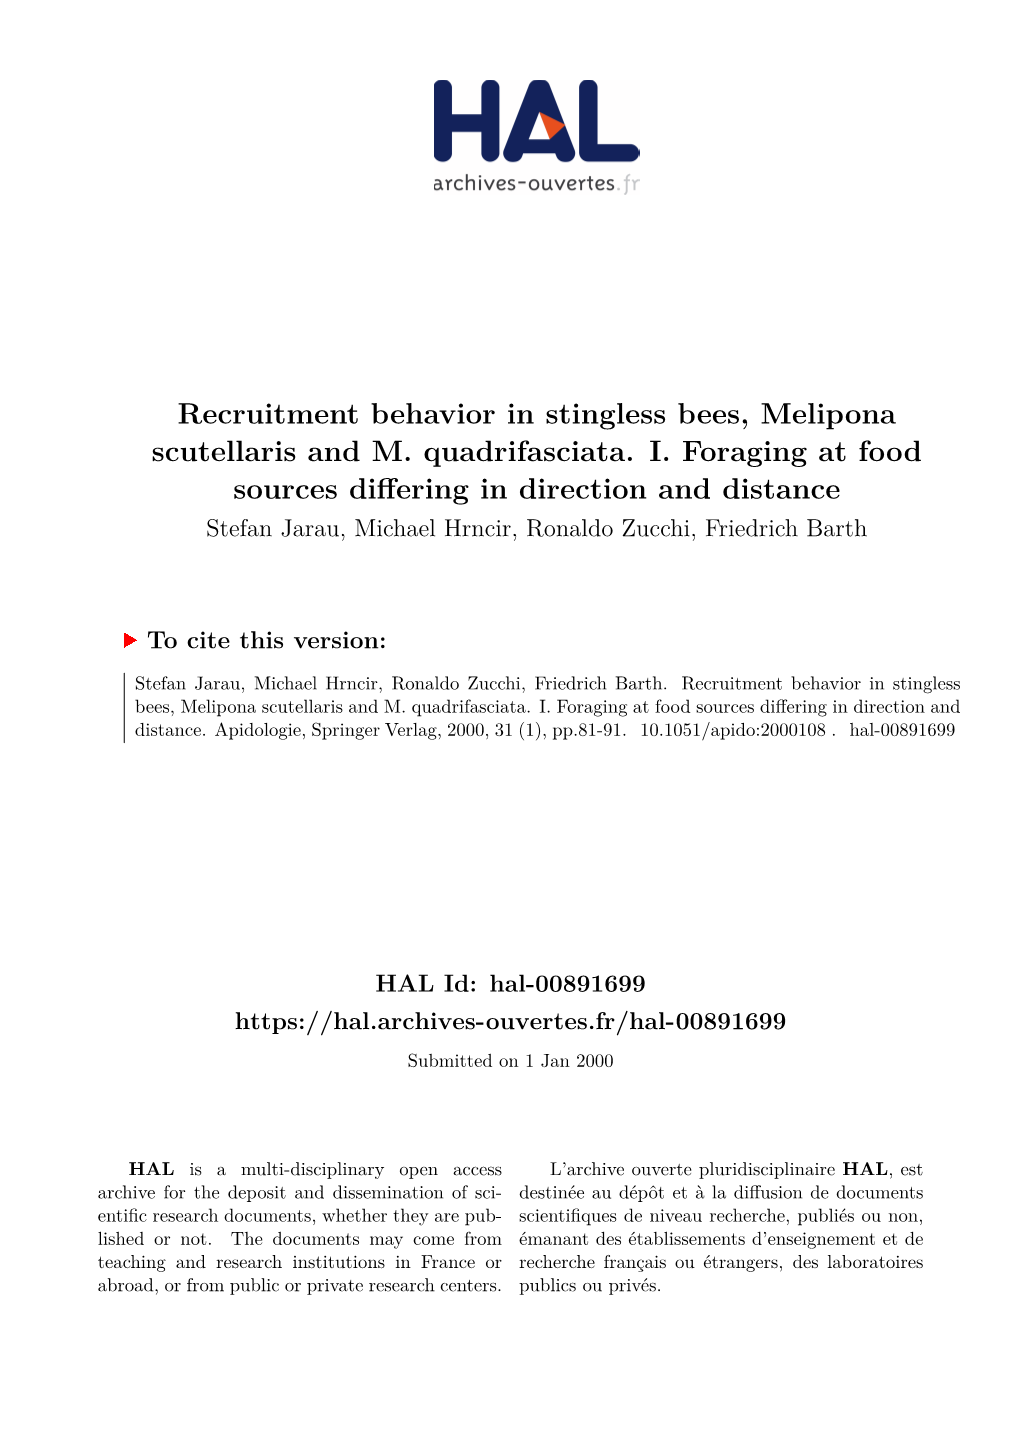 Recruitment Behavior in Stingless Bees, Melipona Scutellaris and M